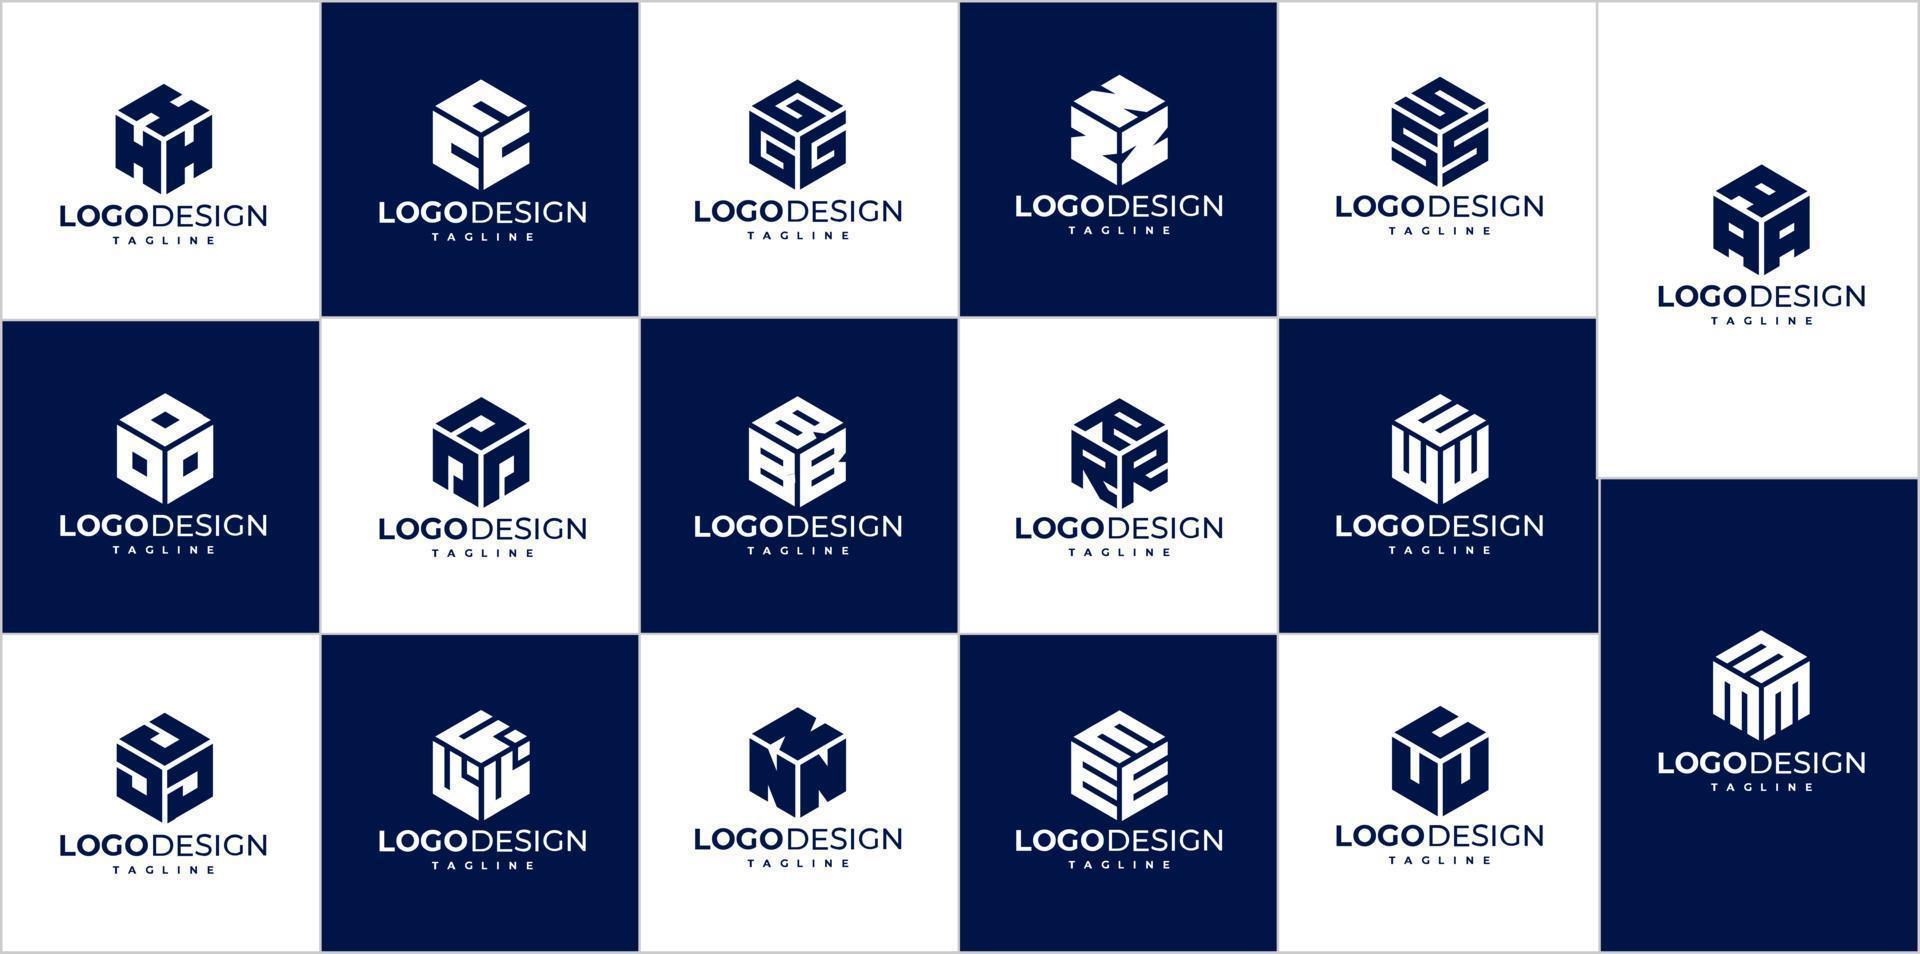 Lettermark logo. Acronym logo. Hexagon logo design vector